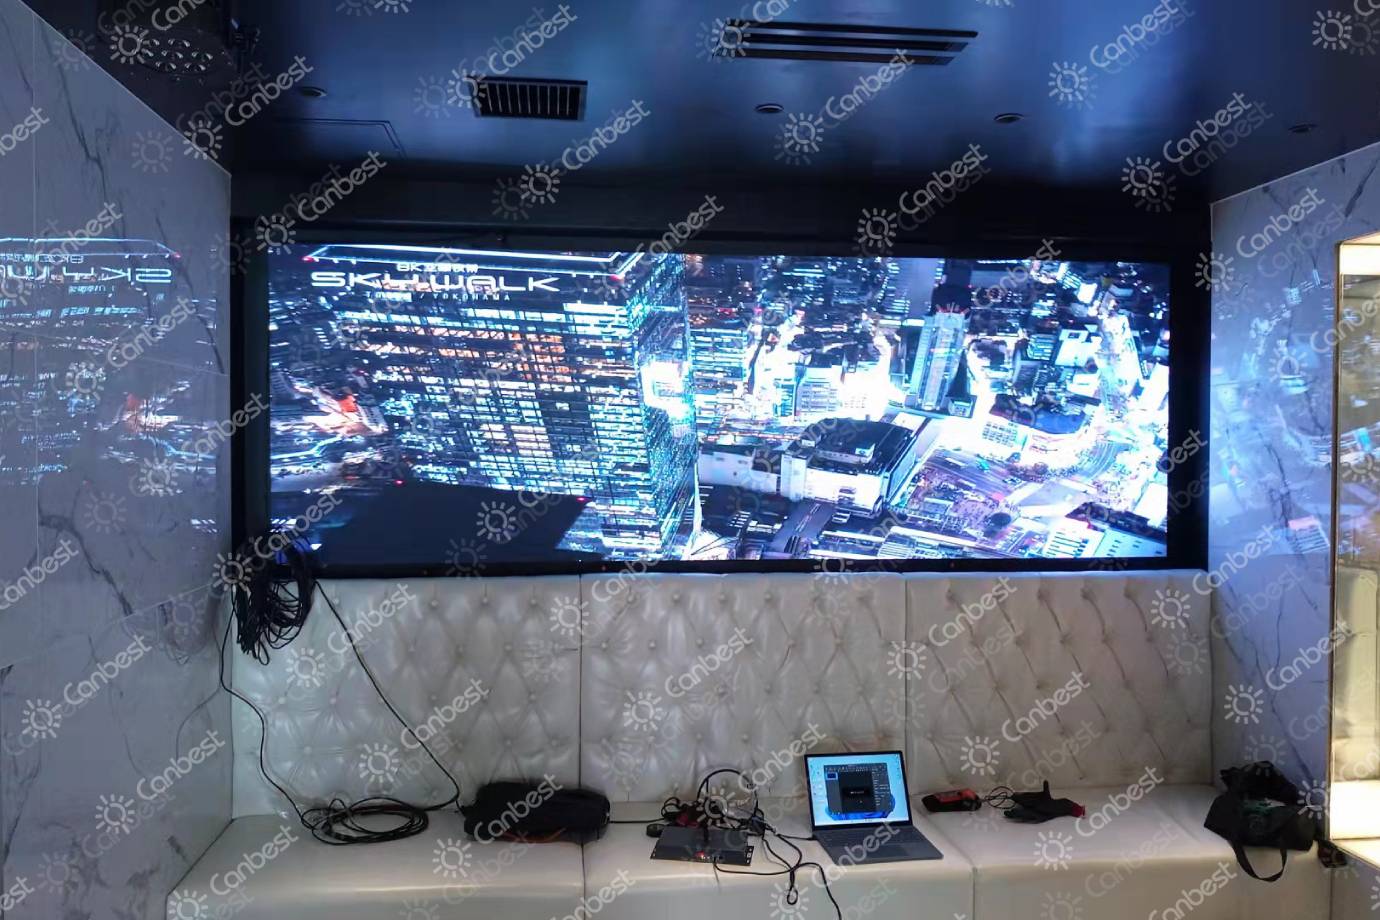 S-plus P1.25 Indoor HD LED Screen In Japan